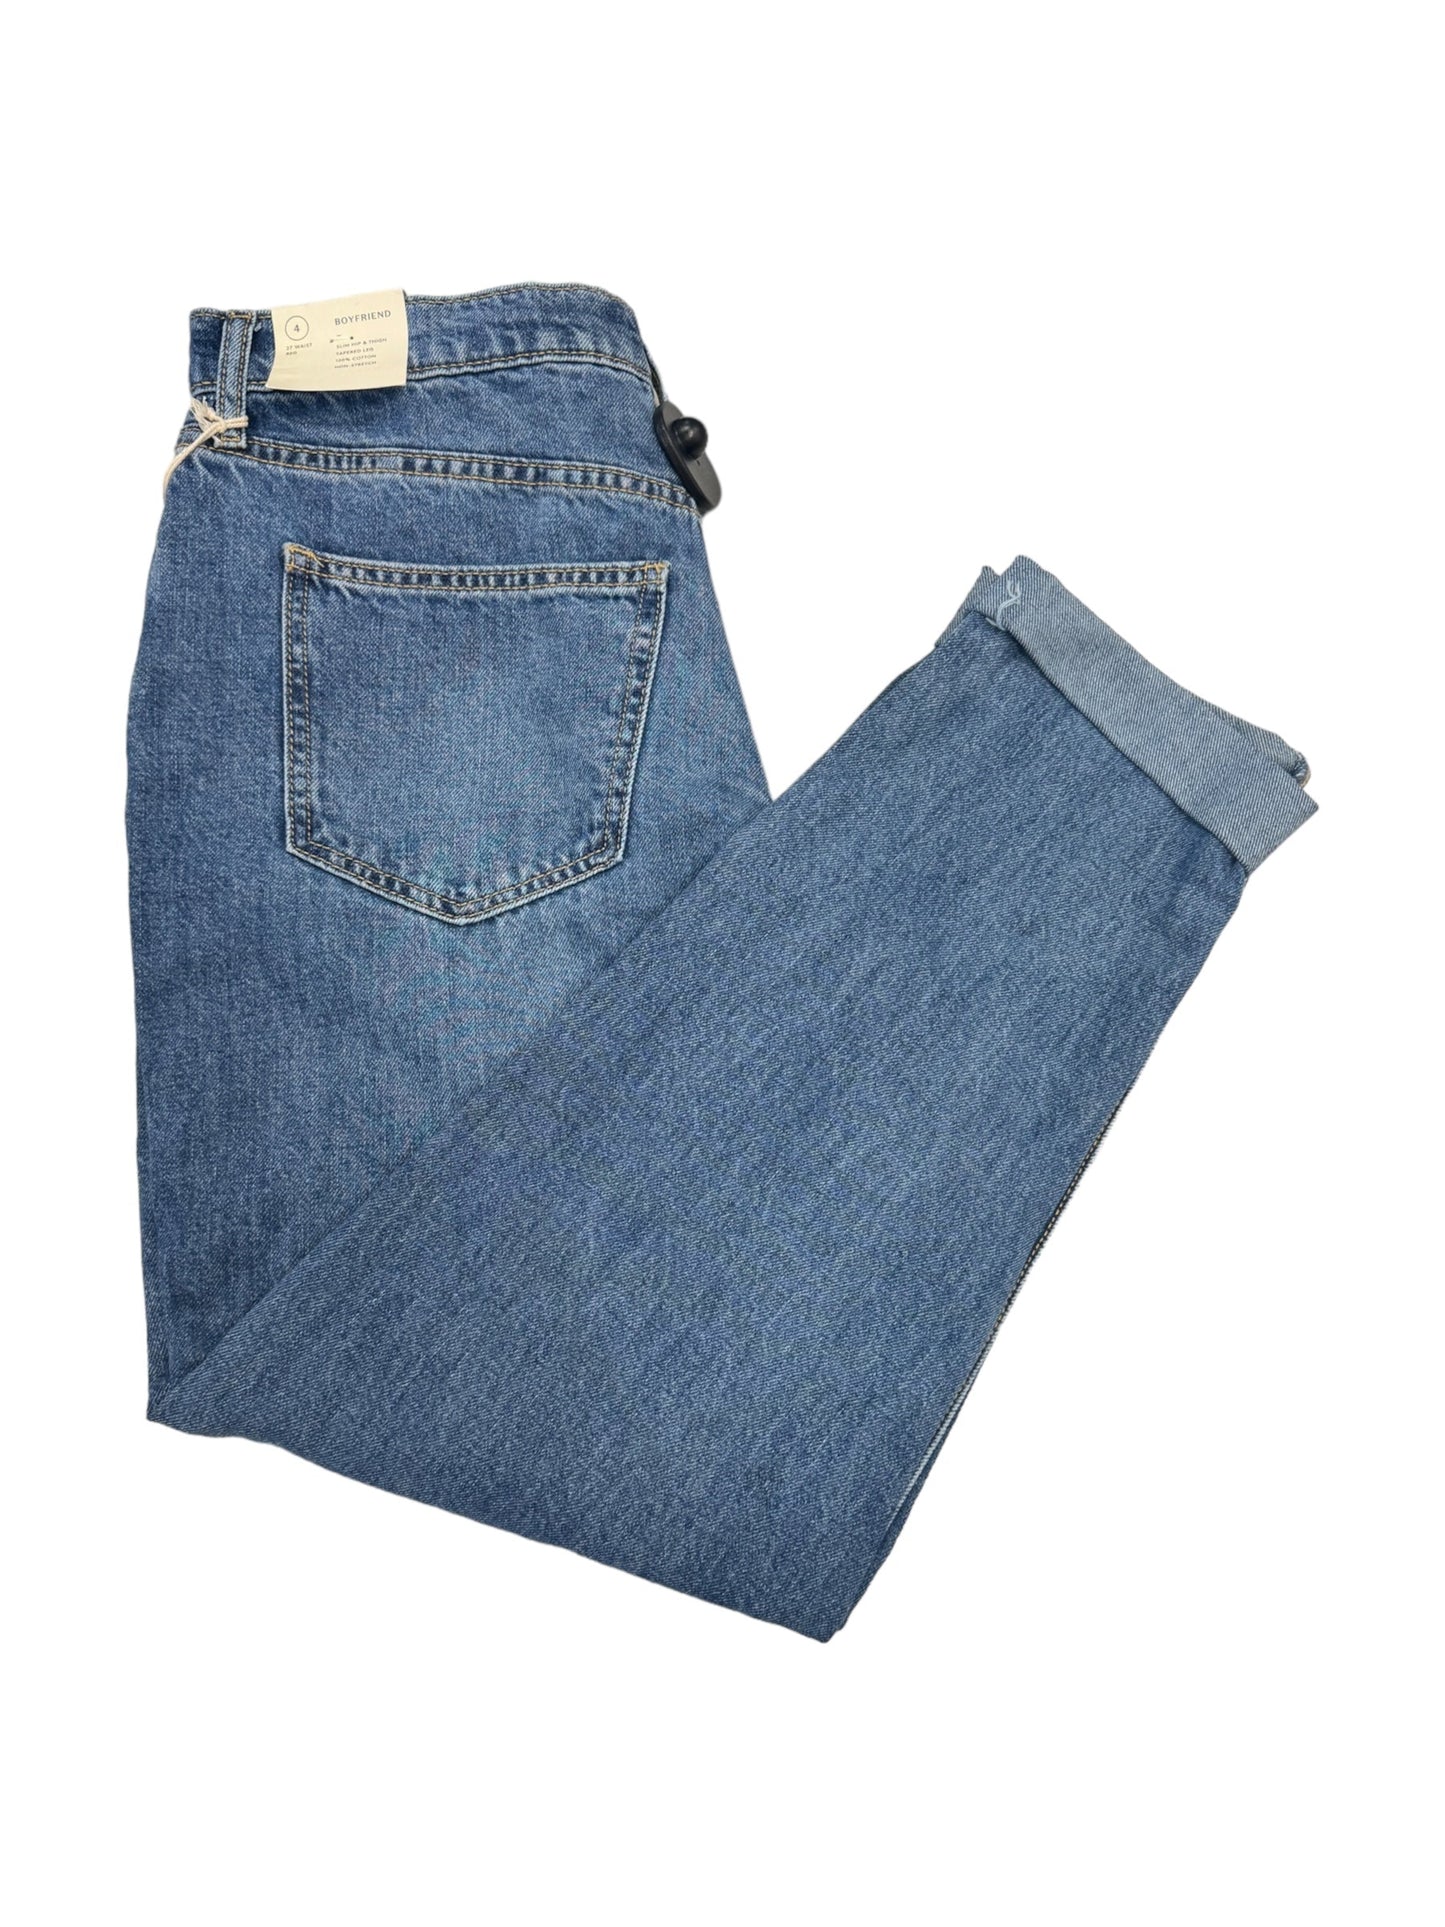 Jeans Boyfriend By Universal Thread  Size: 4